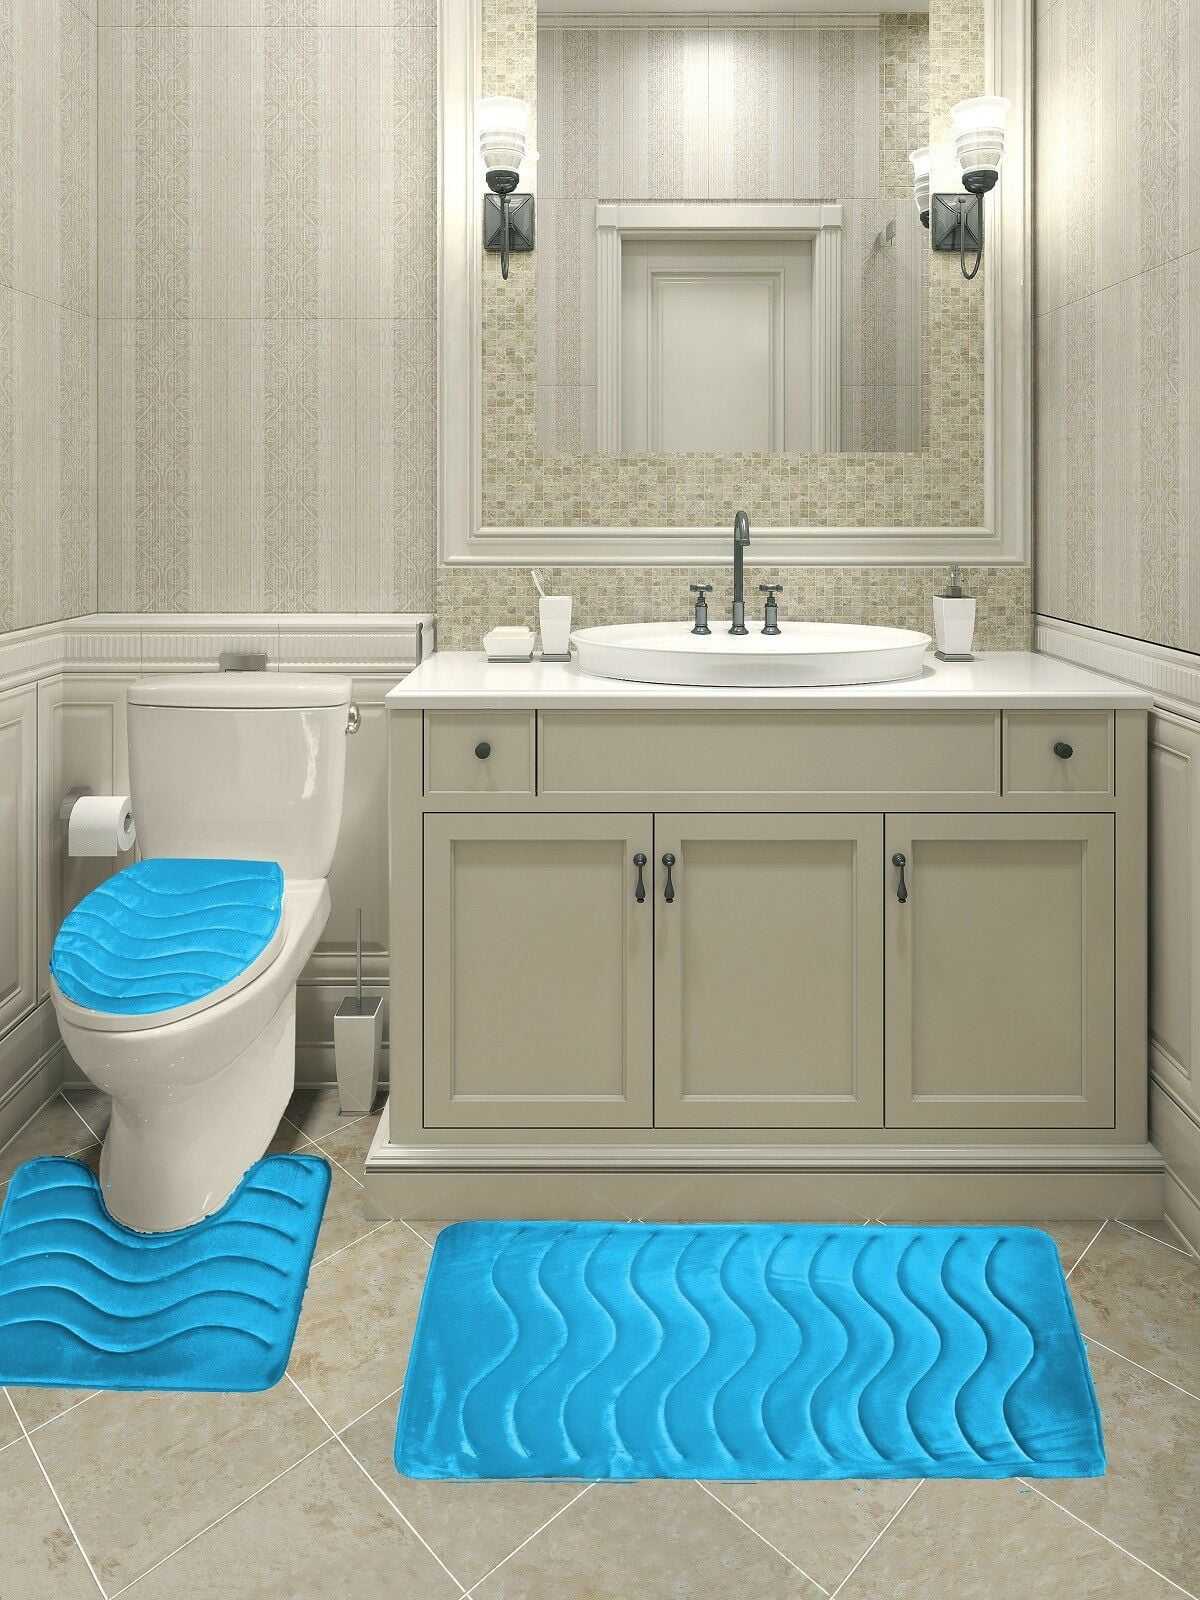 Absorbent Bath Rug Set for Bathroom U-Shaped Contour Rug Mat and Toilet Lid Cover EZON-CH Purple Floral Texture Pattern 3pcs Non Slip Bath Rug Sets 20x31+16x18+16x20